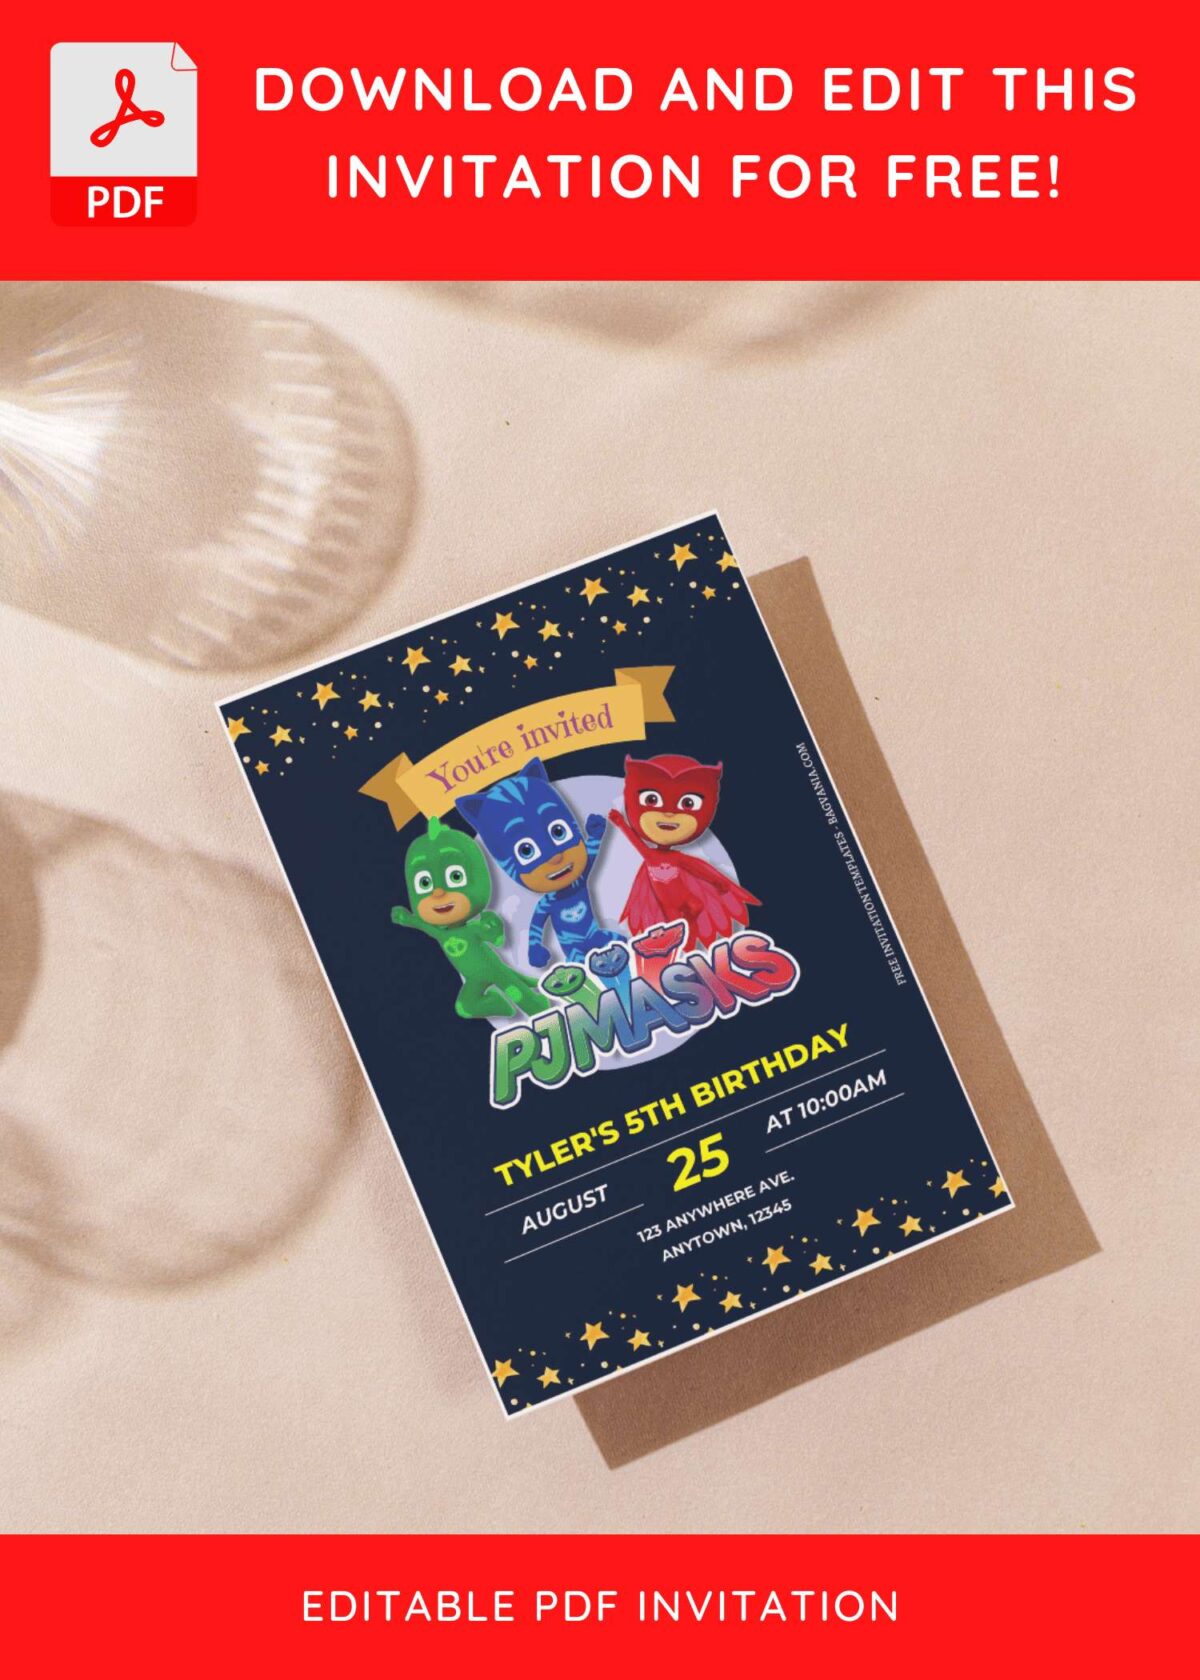 (Free Editable PDF) Lovely PJ Masks Birthday Invitation Templates G